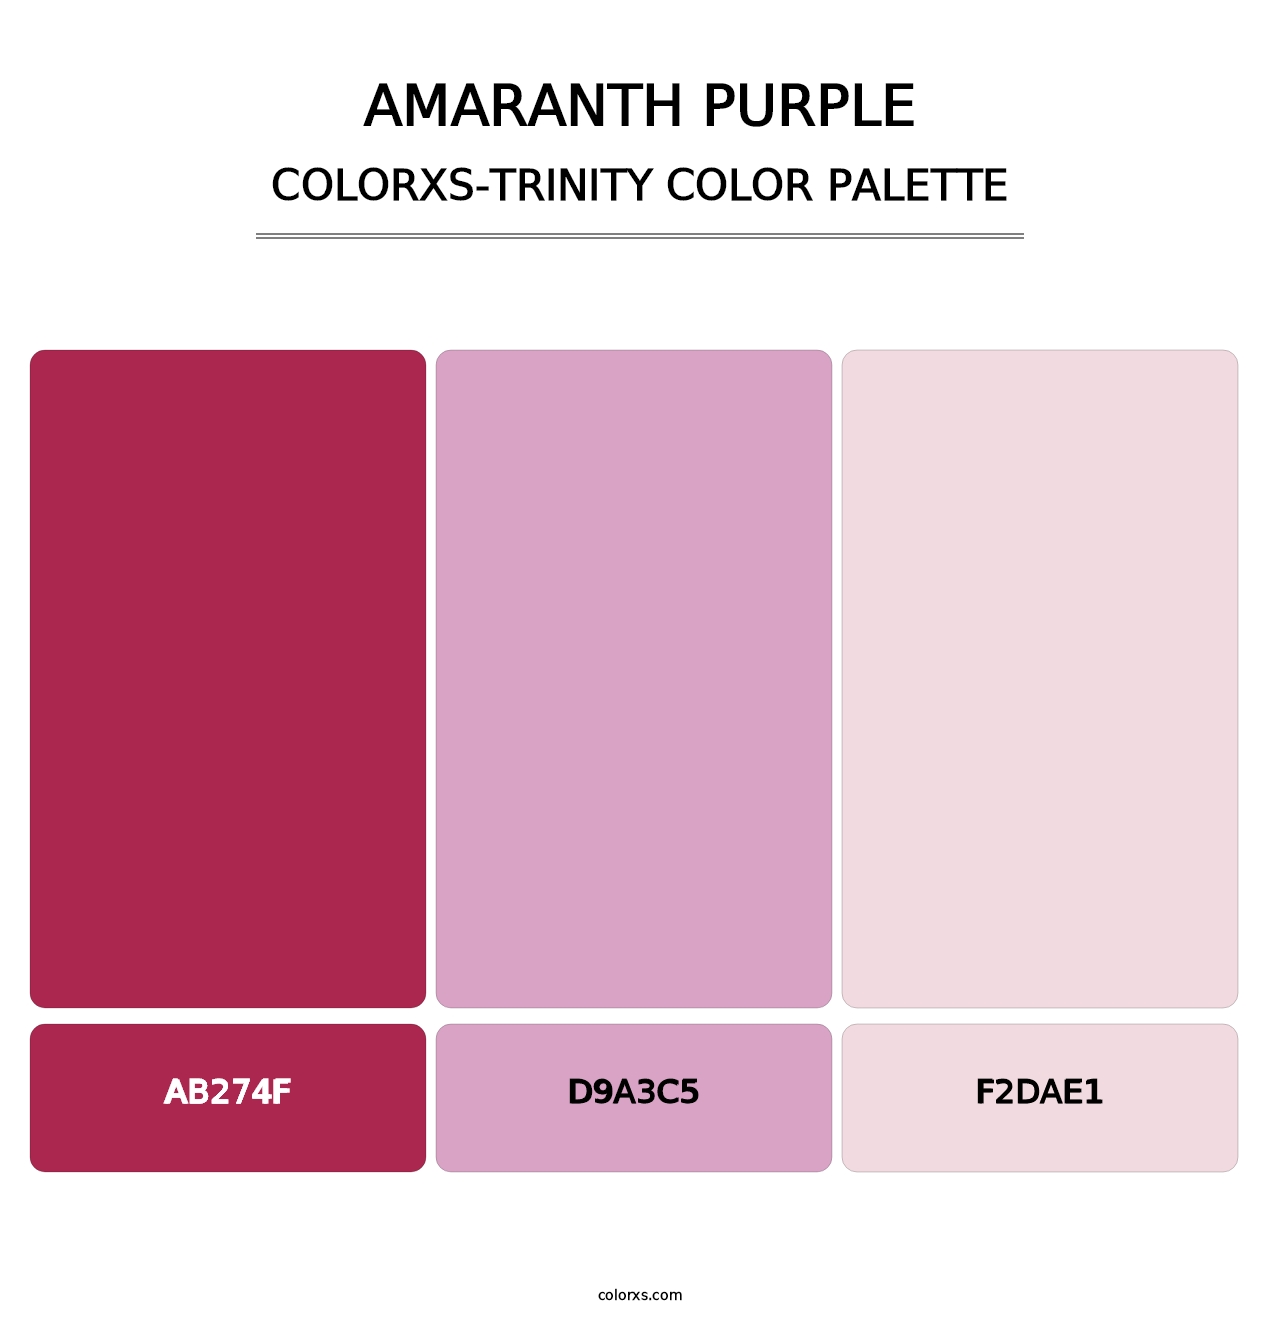 Amaranth Purple - Colorxs Trinity Palette